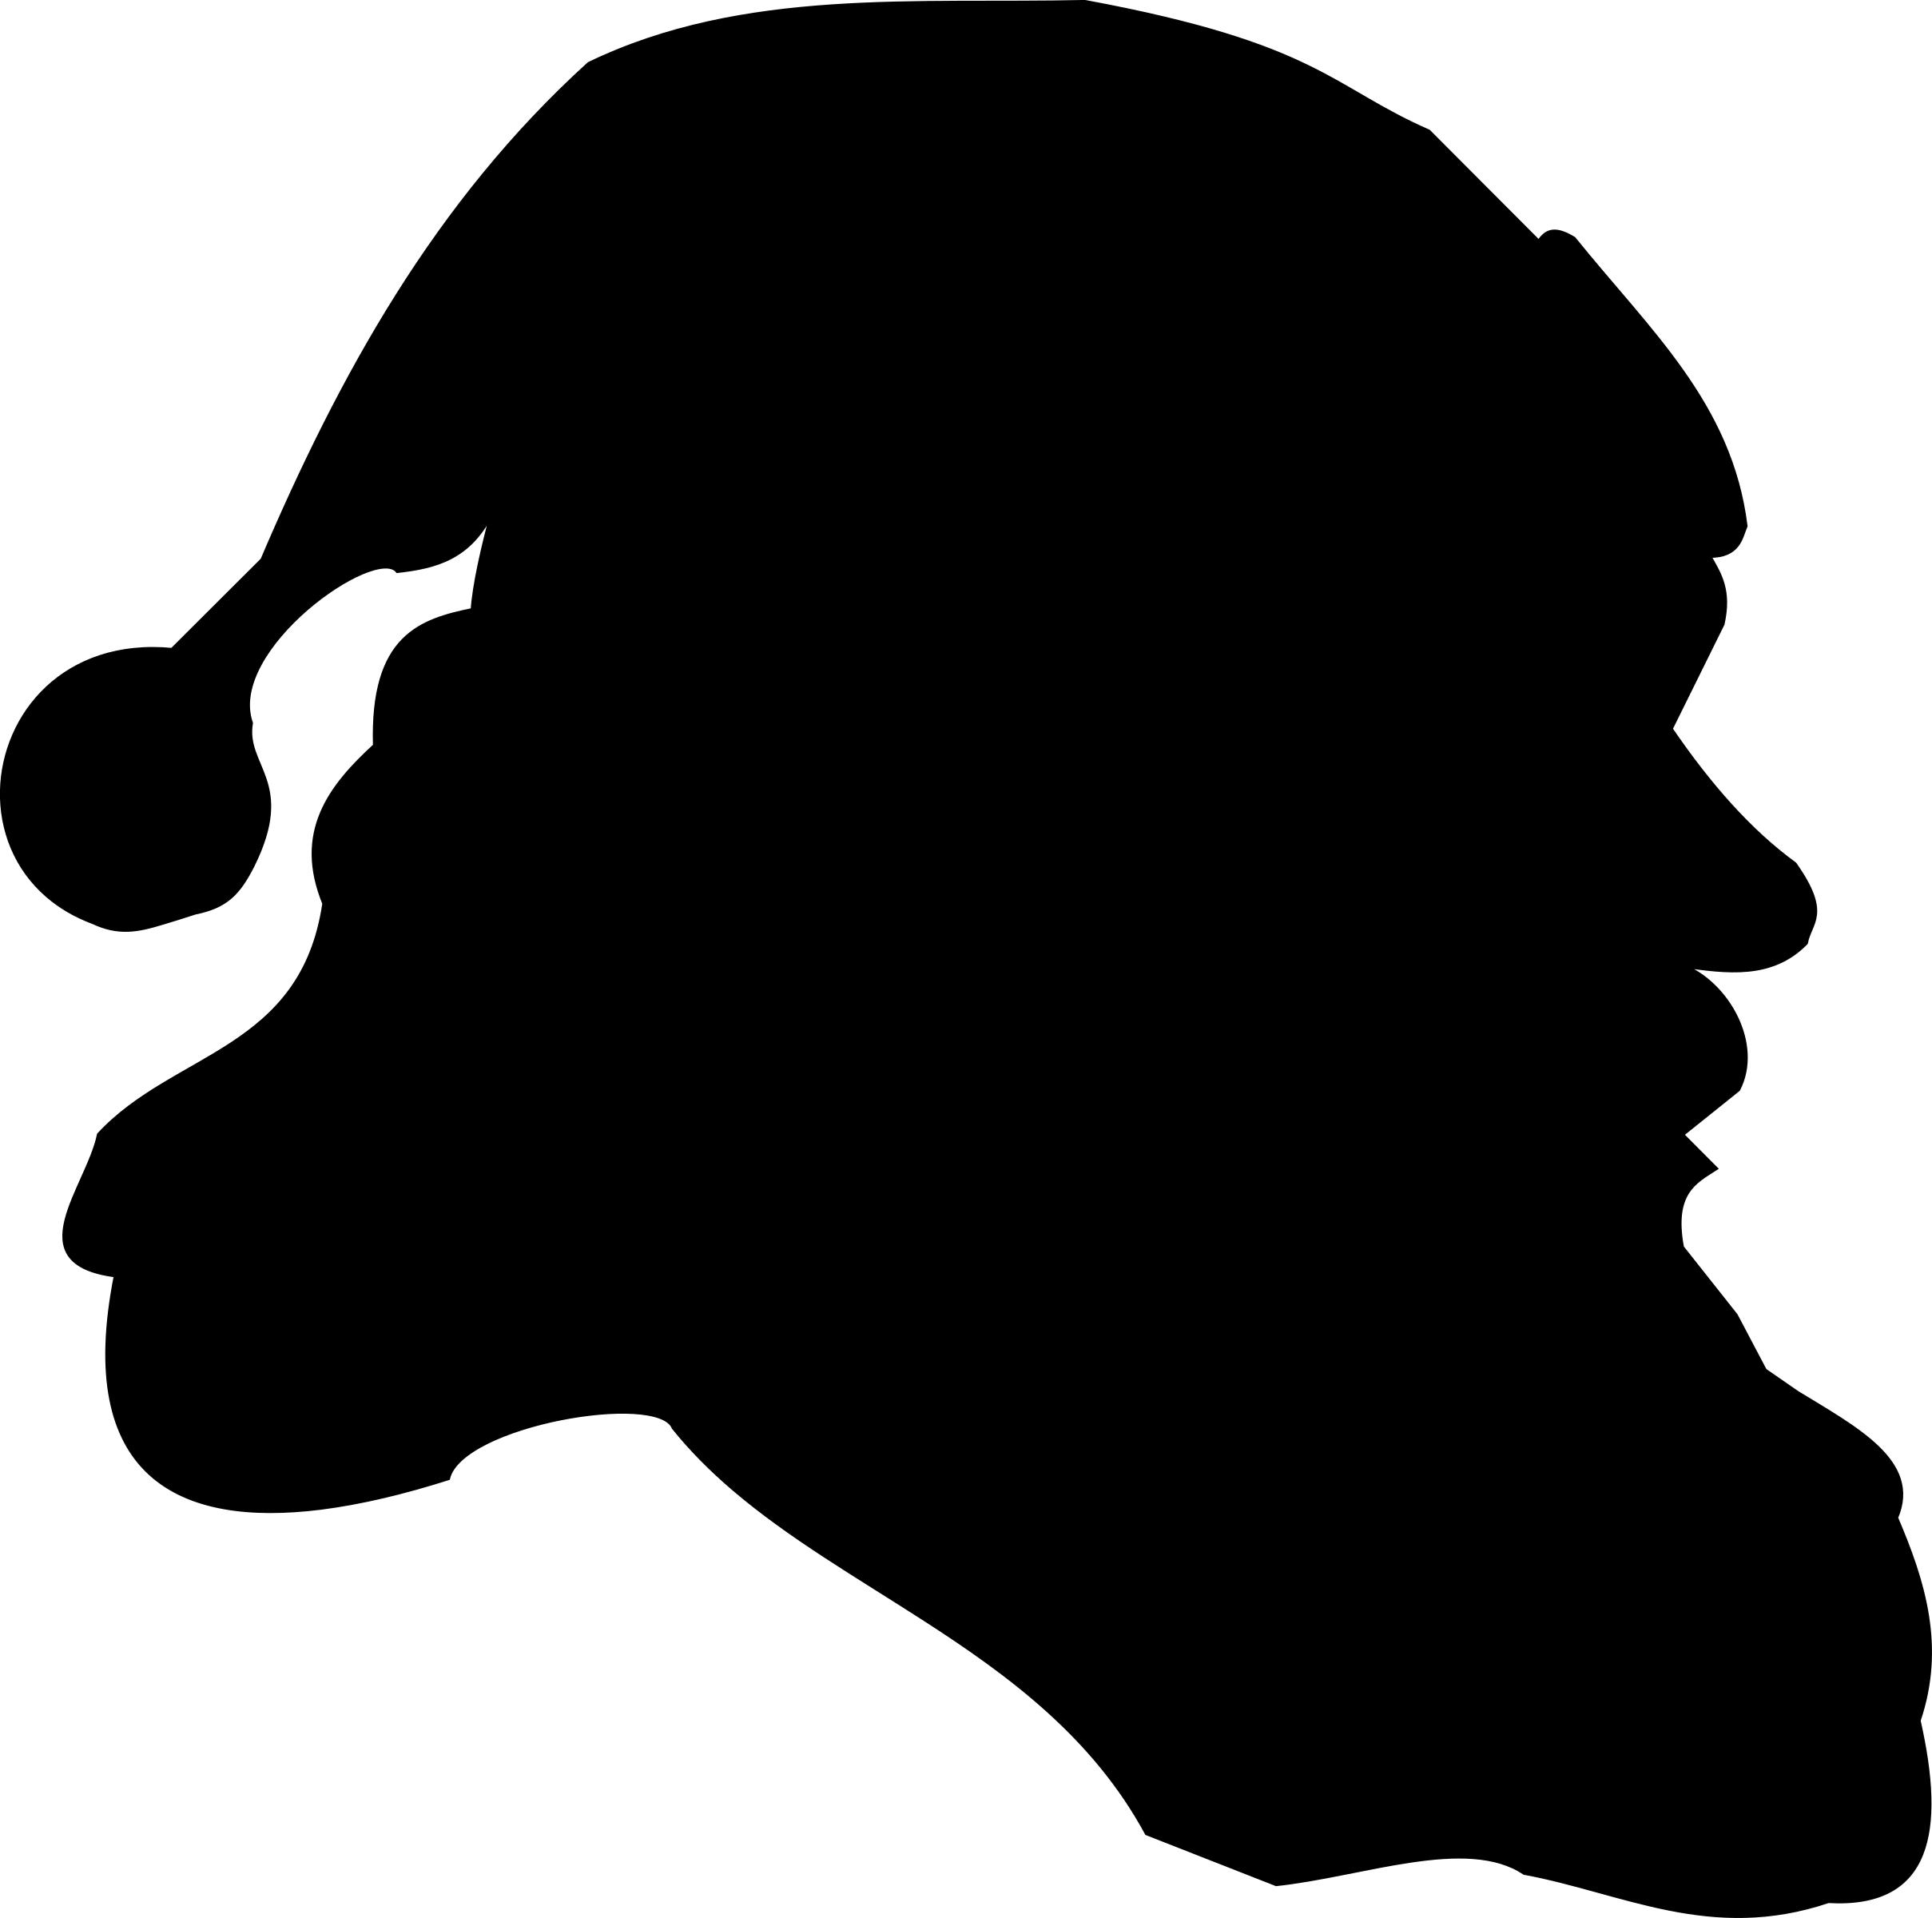 Santa Claus silhouette profile dingbat png